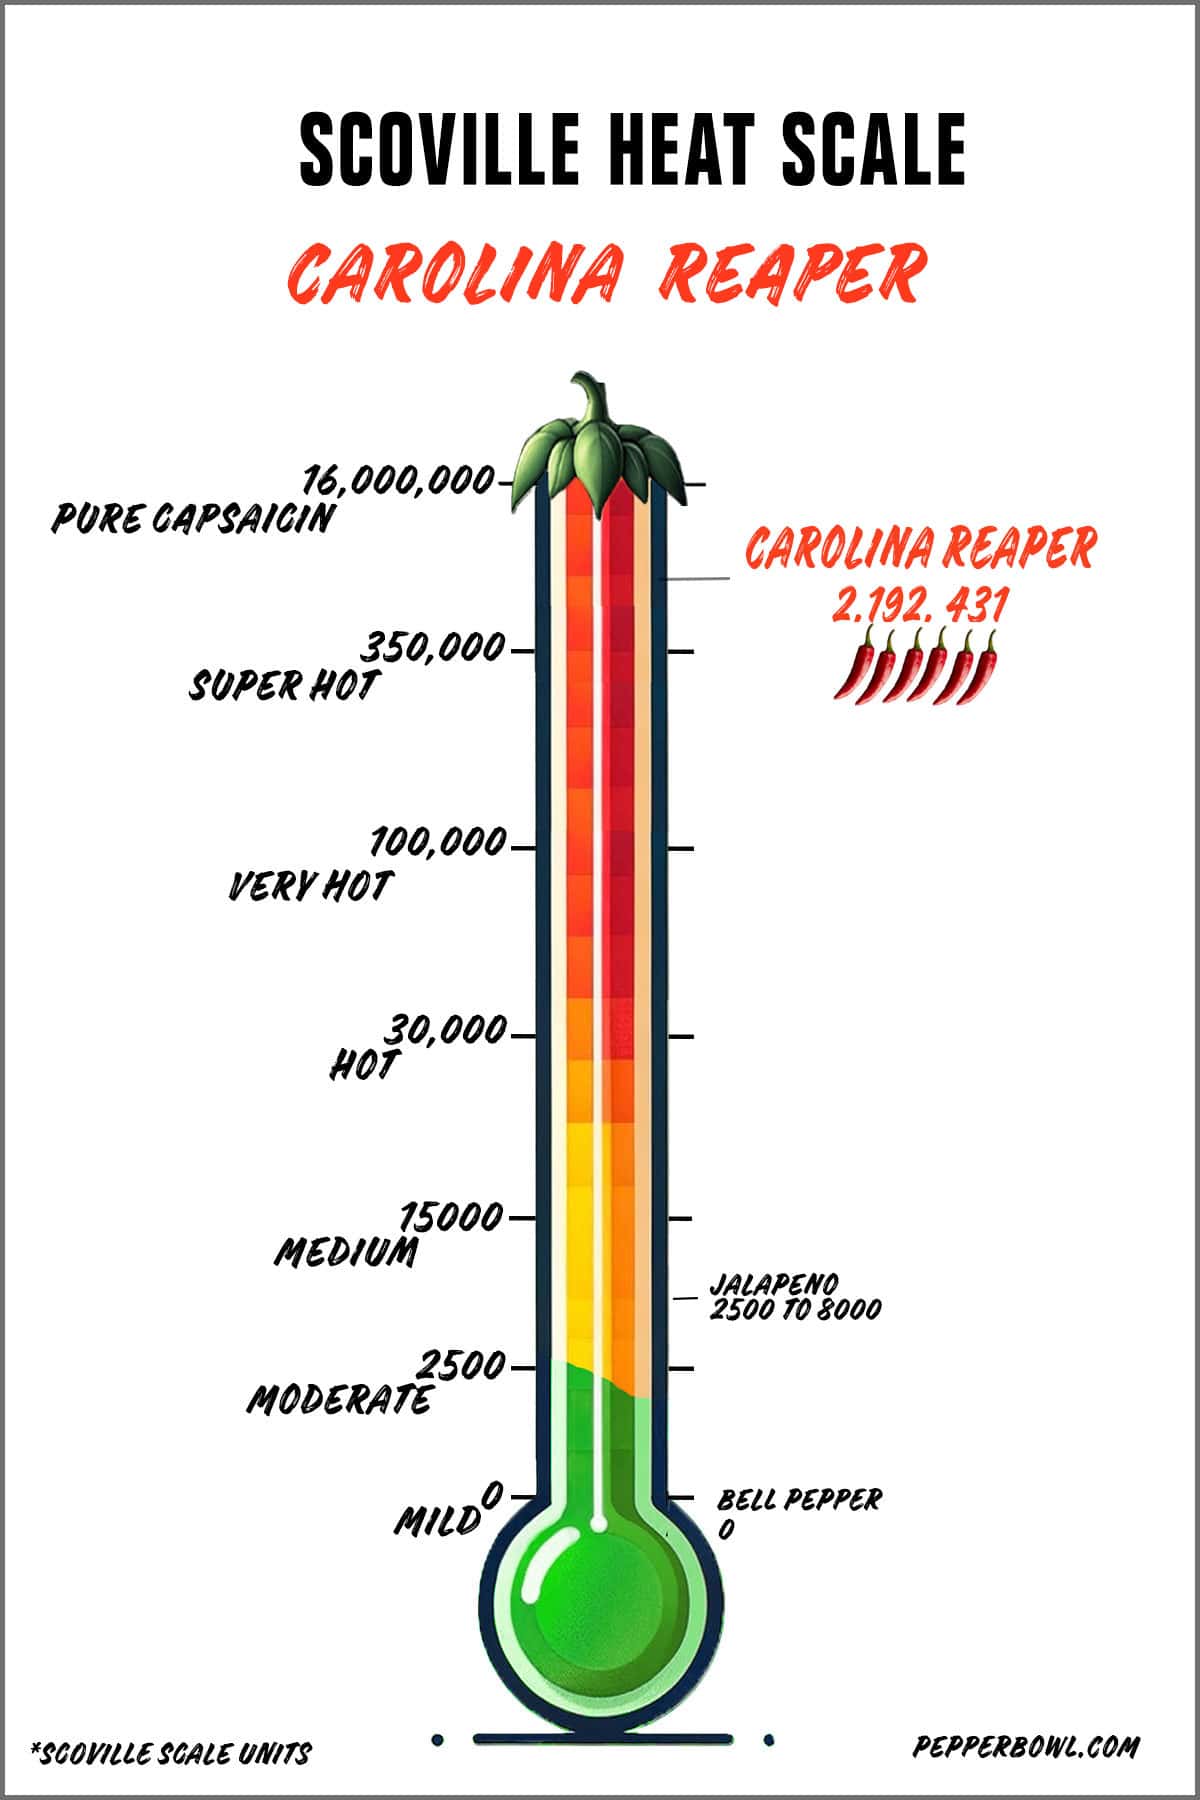 Illustration of Carolina Reaper chili pepper in the Scoville scale, representing its super hot heat intensity.